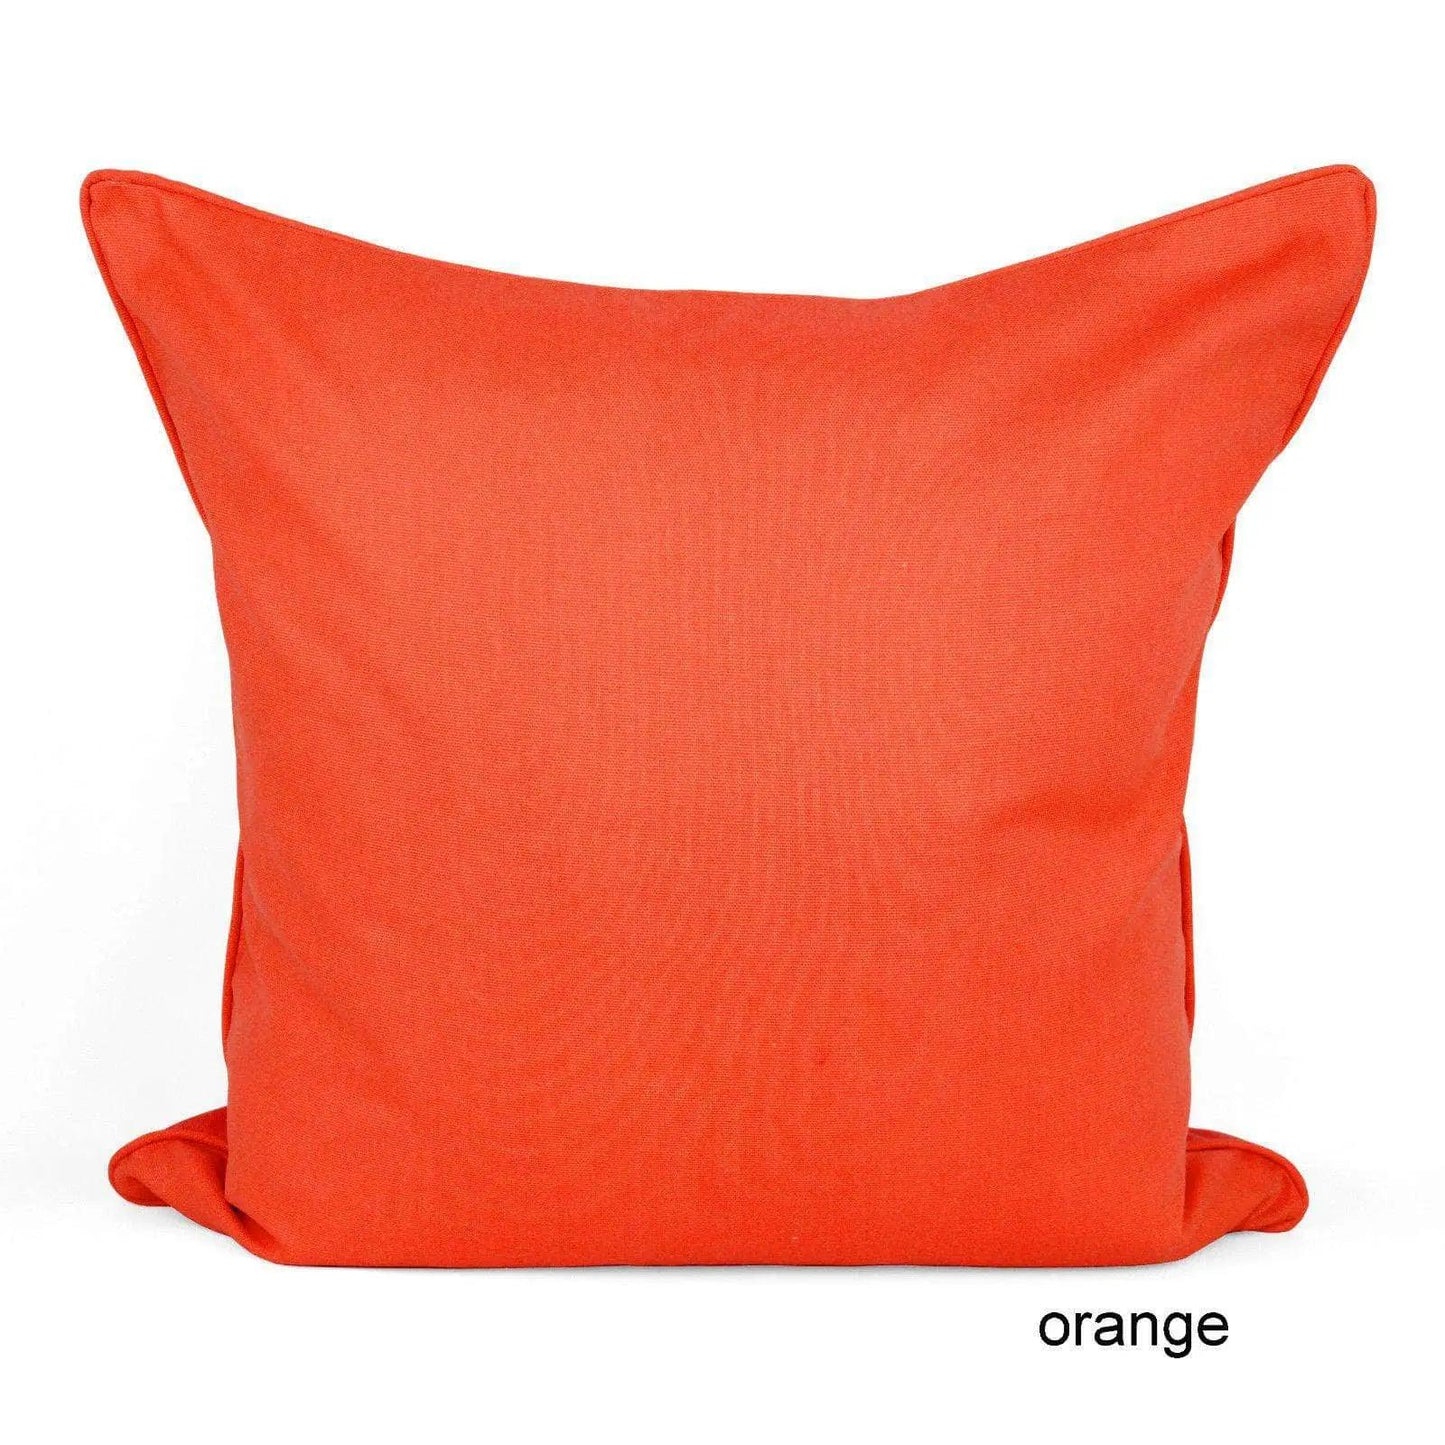 an orange pillow on a white background